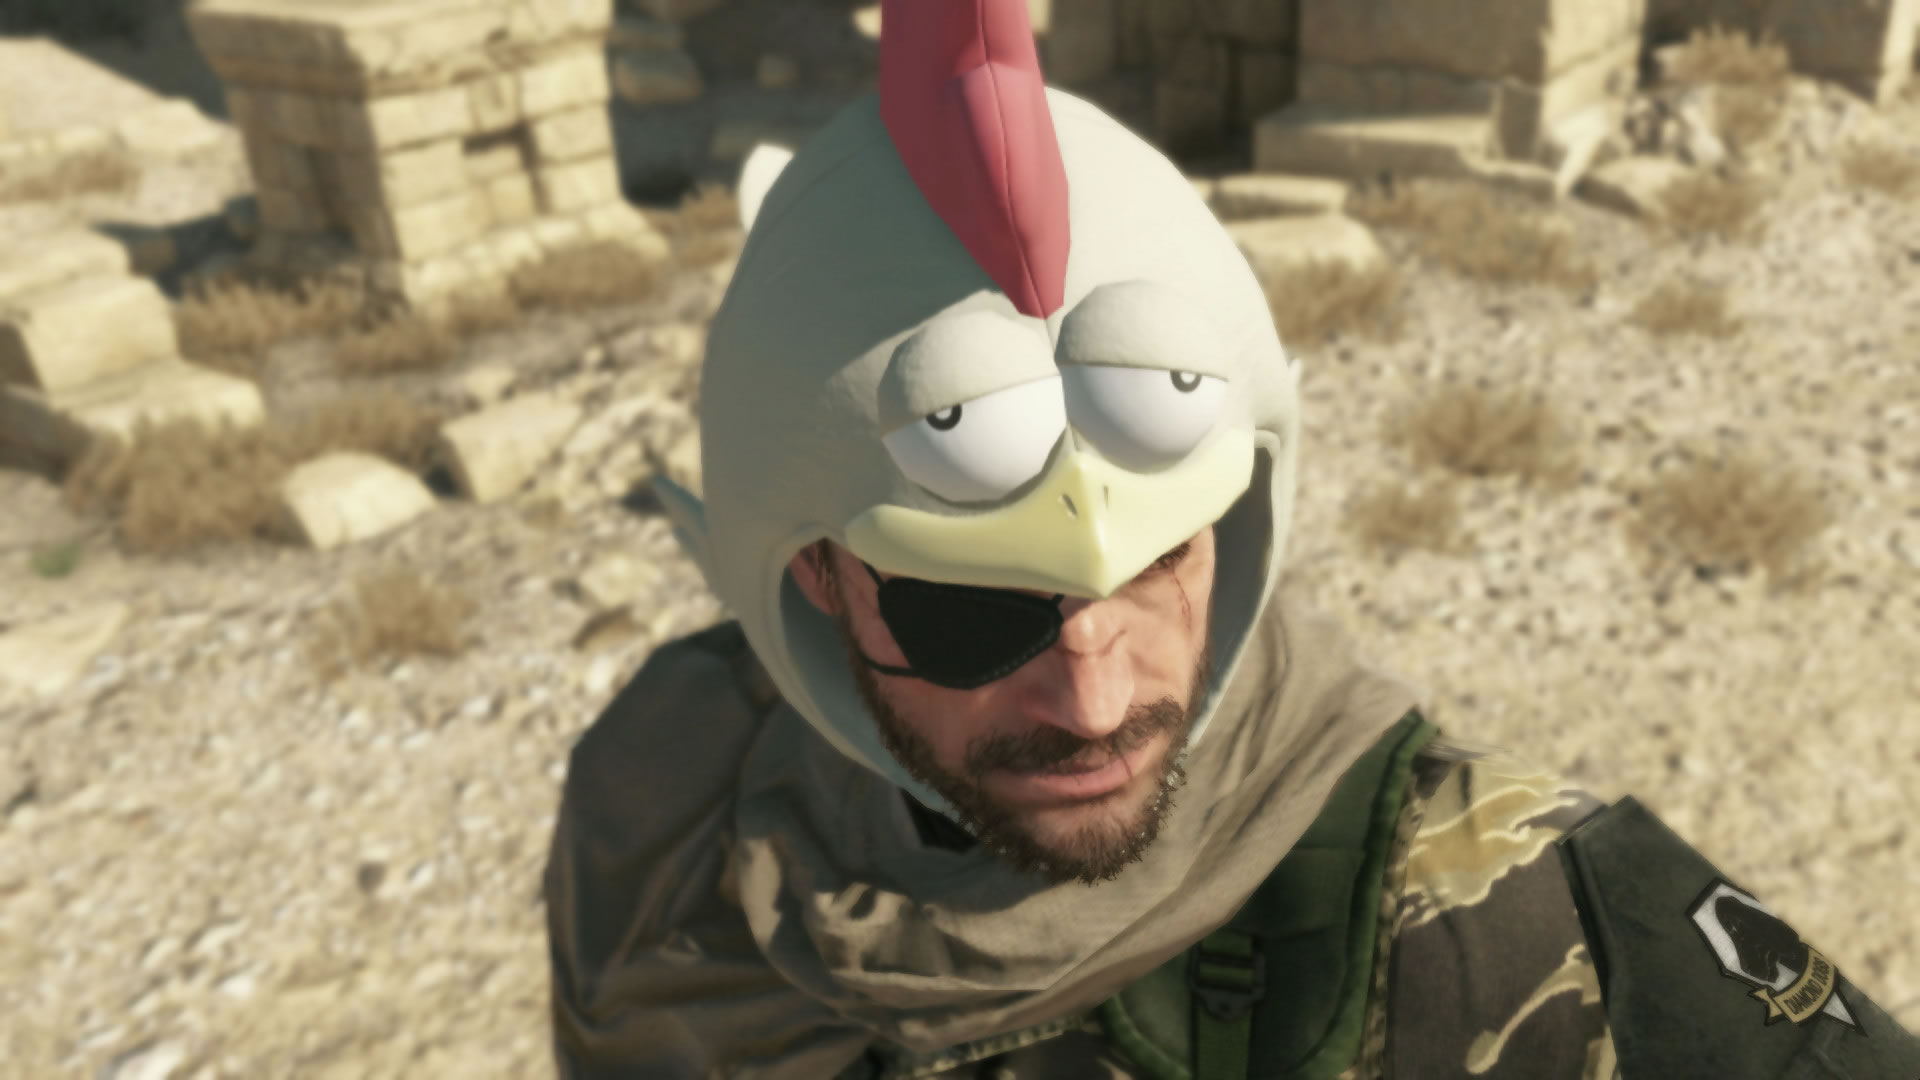 Les origines du chapeau poulet de Big Boss dans Metal Gear Solid V